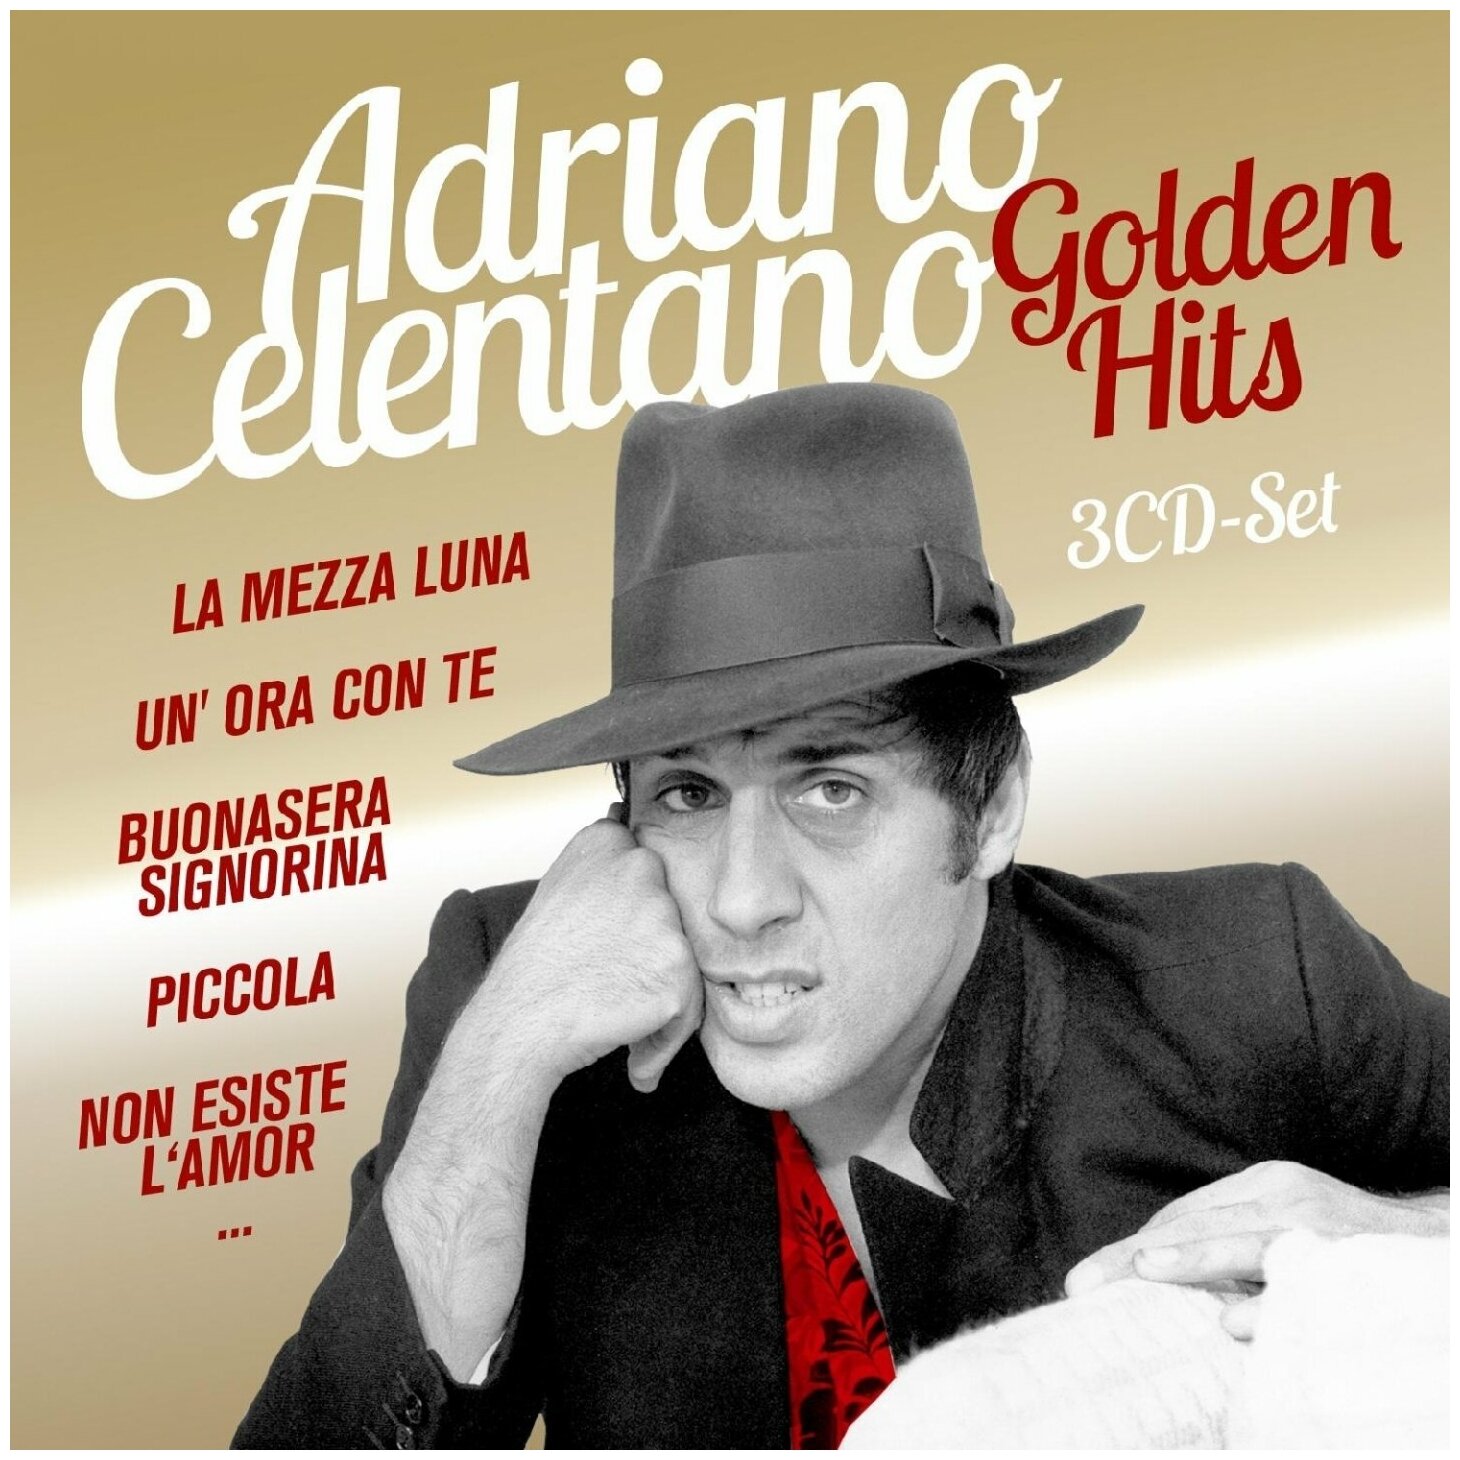 Adriano Celentano Golden Hits (3CD) ZYX Music